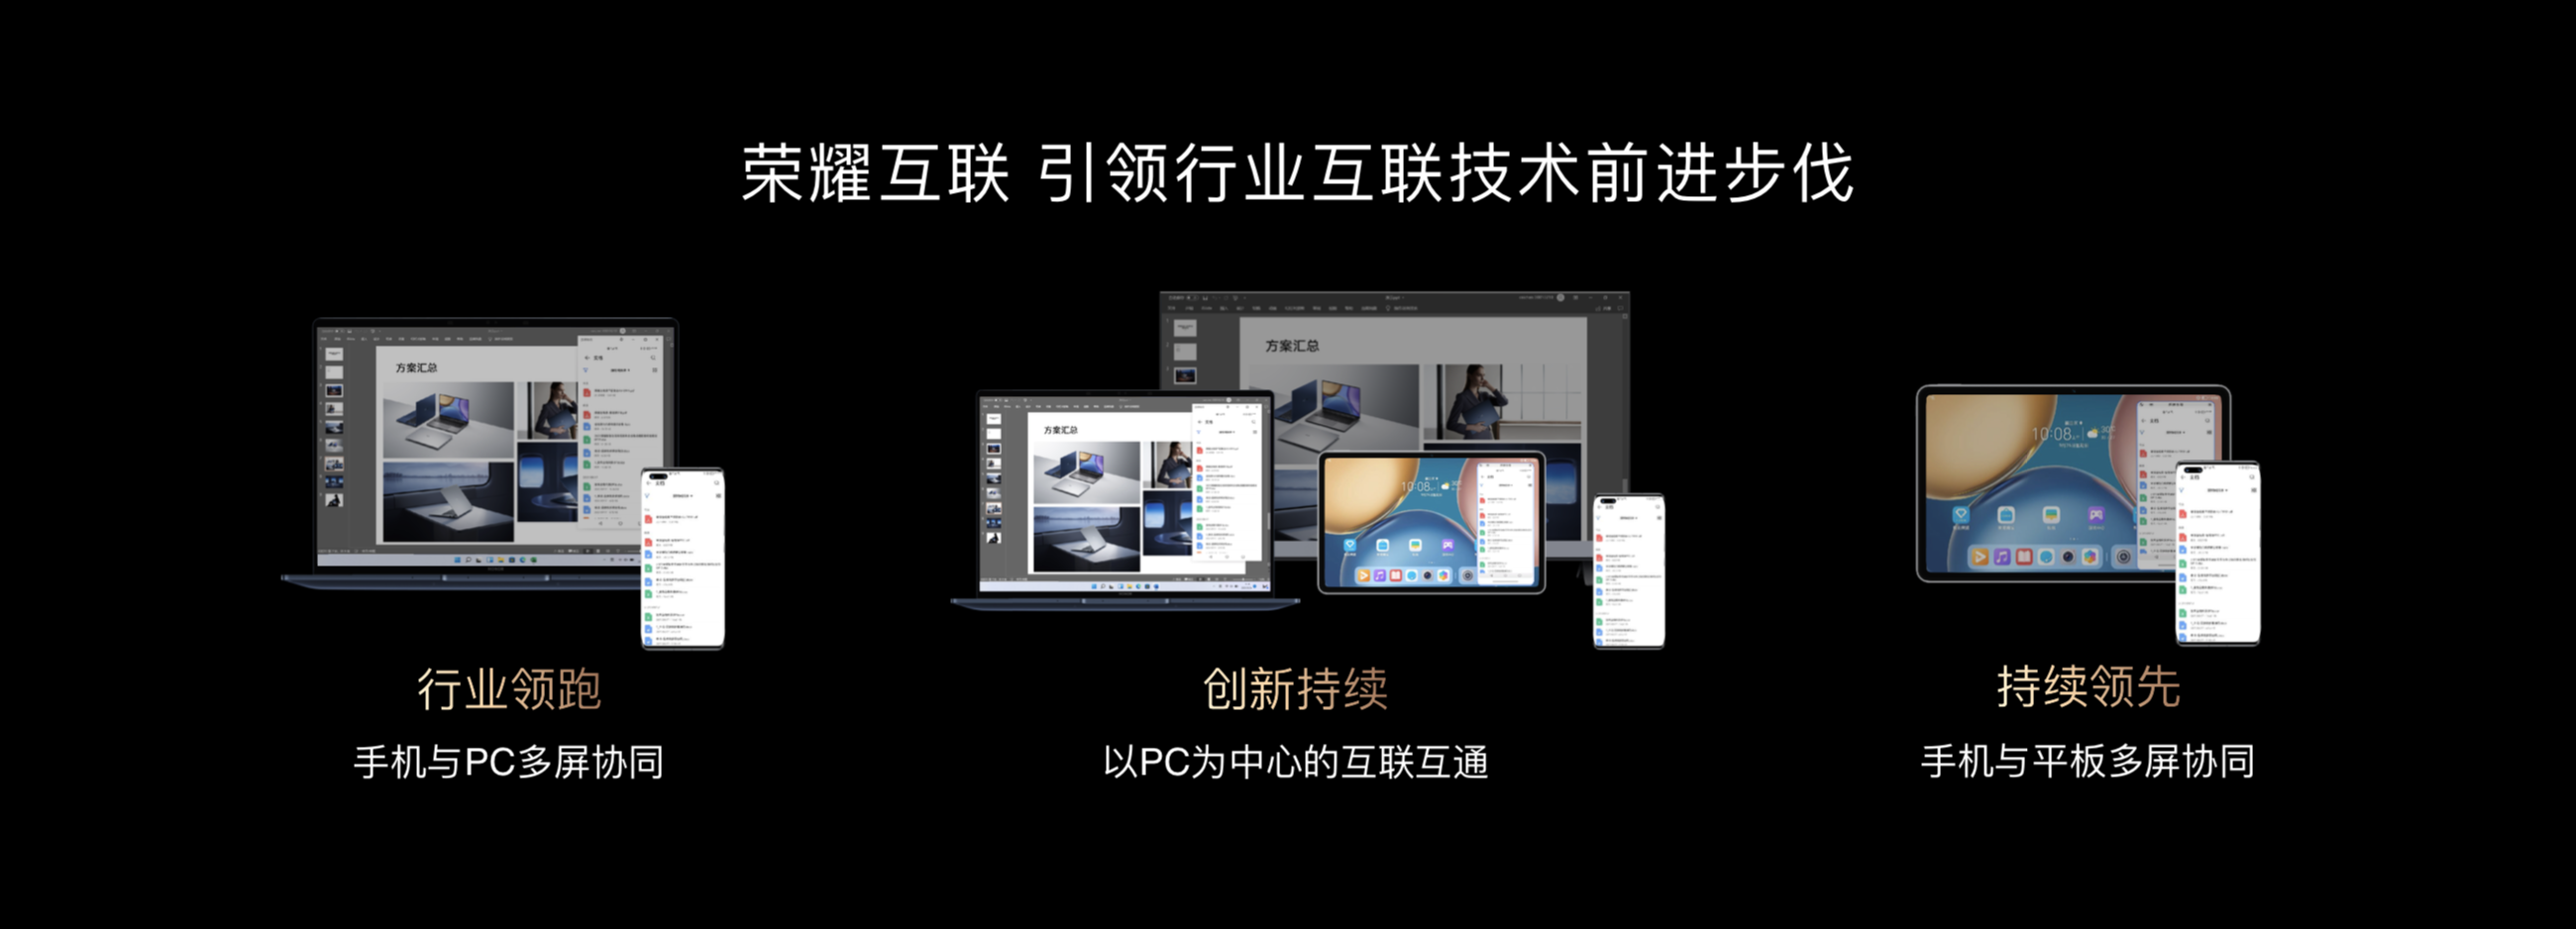 Macintosh HD:Users:guoqing:Documents:迪思:荣耀笔记本:全场景发布会图:全场景发布会KEYNOTE截图:WechatIMG106.png